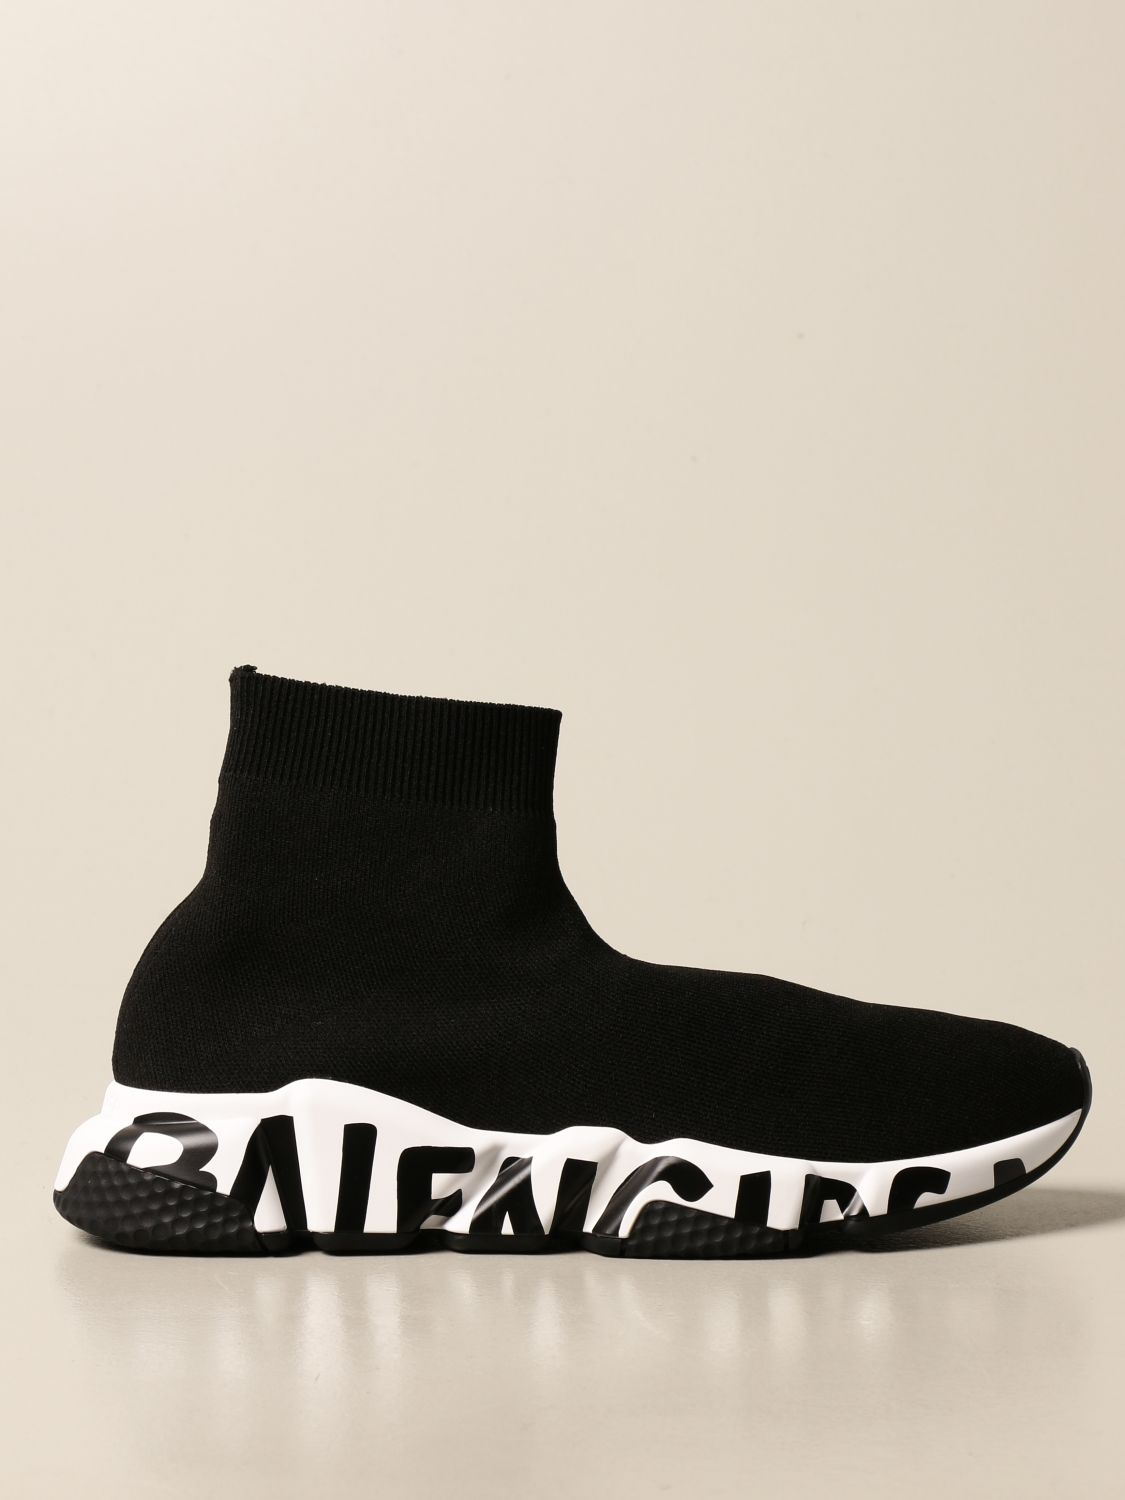 BALENCIAGA: Speed sock sneakers with graffiti sole - Black | Balenciaga  shoes 605942 W05GE online on 